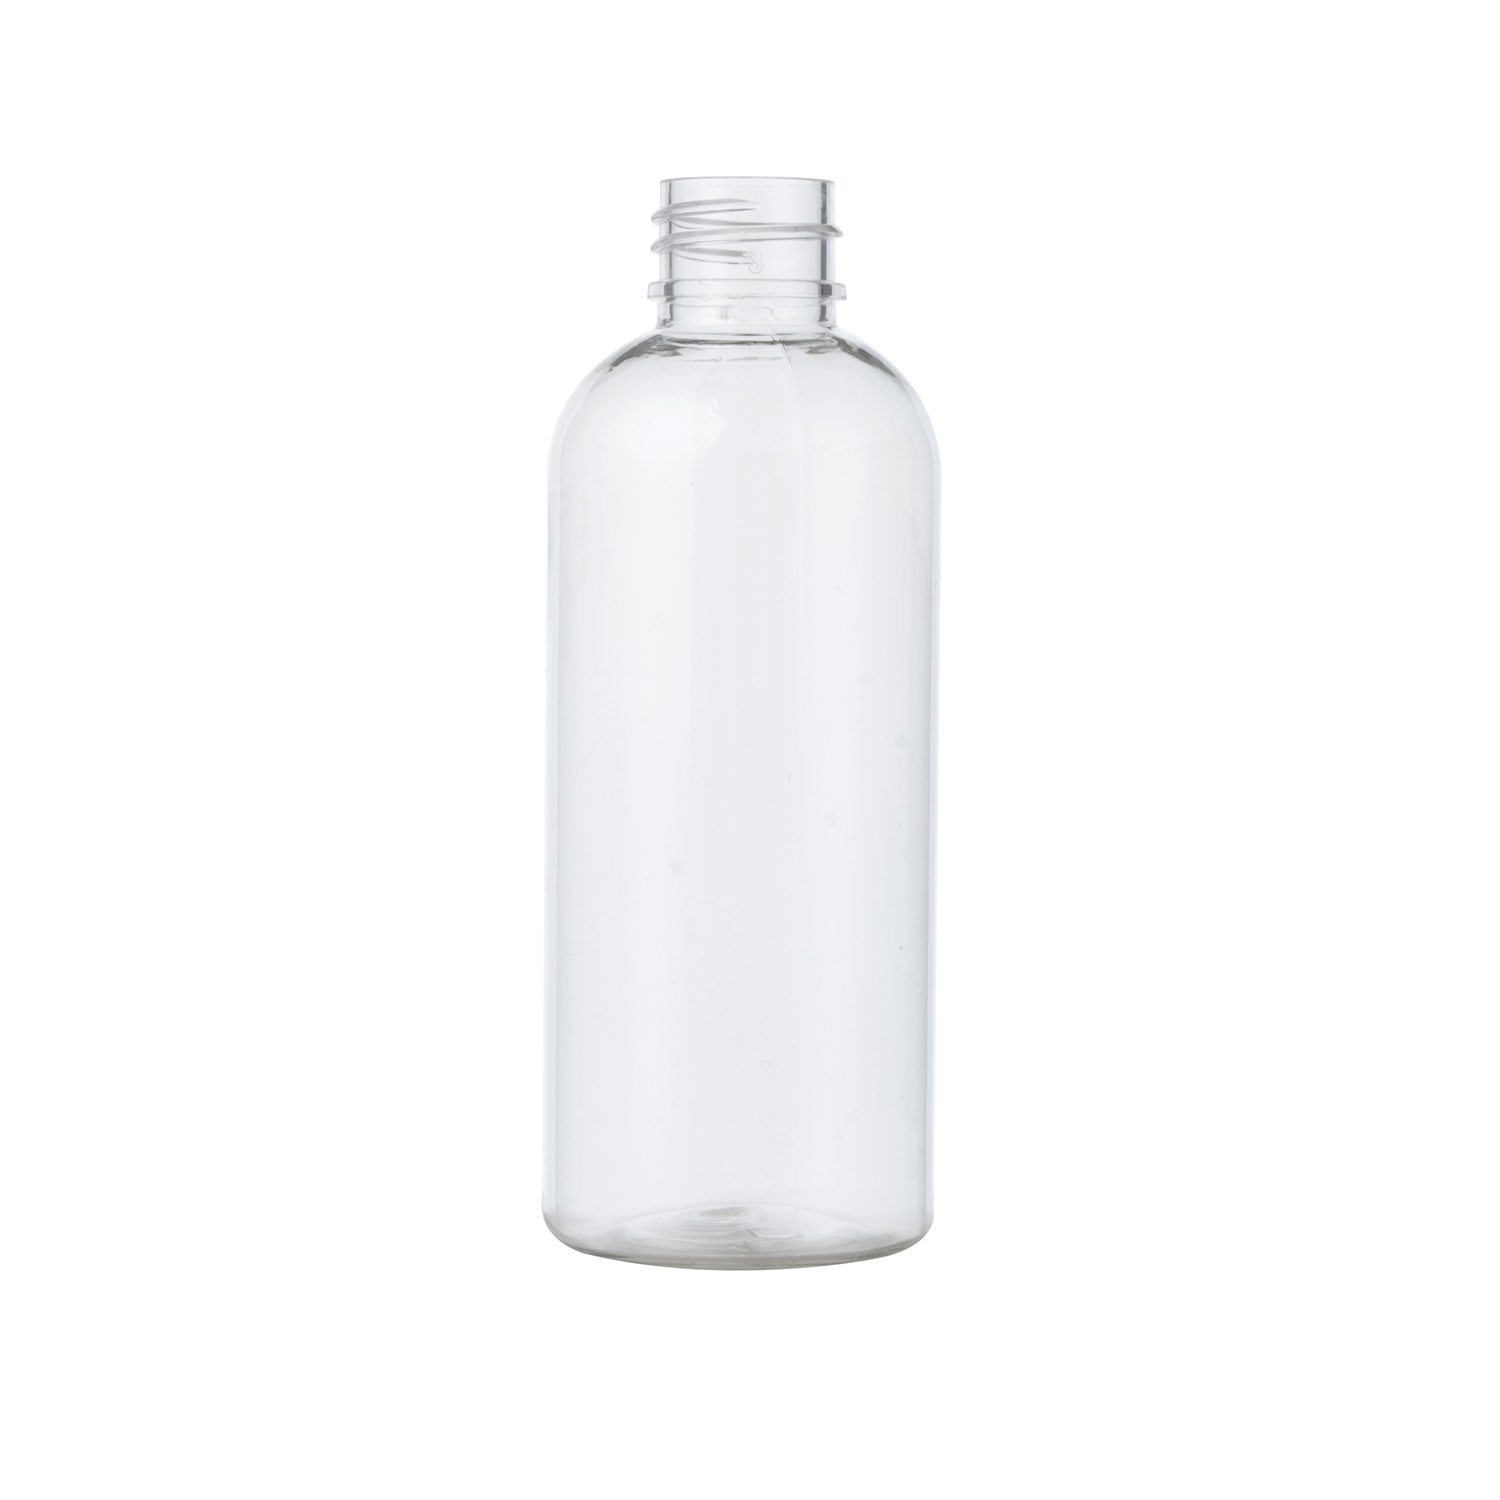 50ml pet spray bottle Boston Round Plastic Bottle